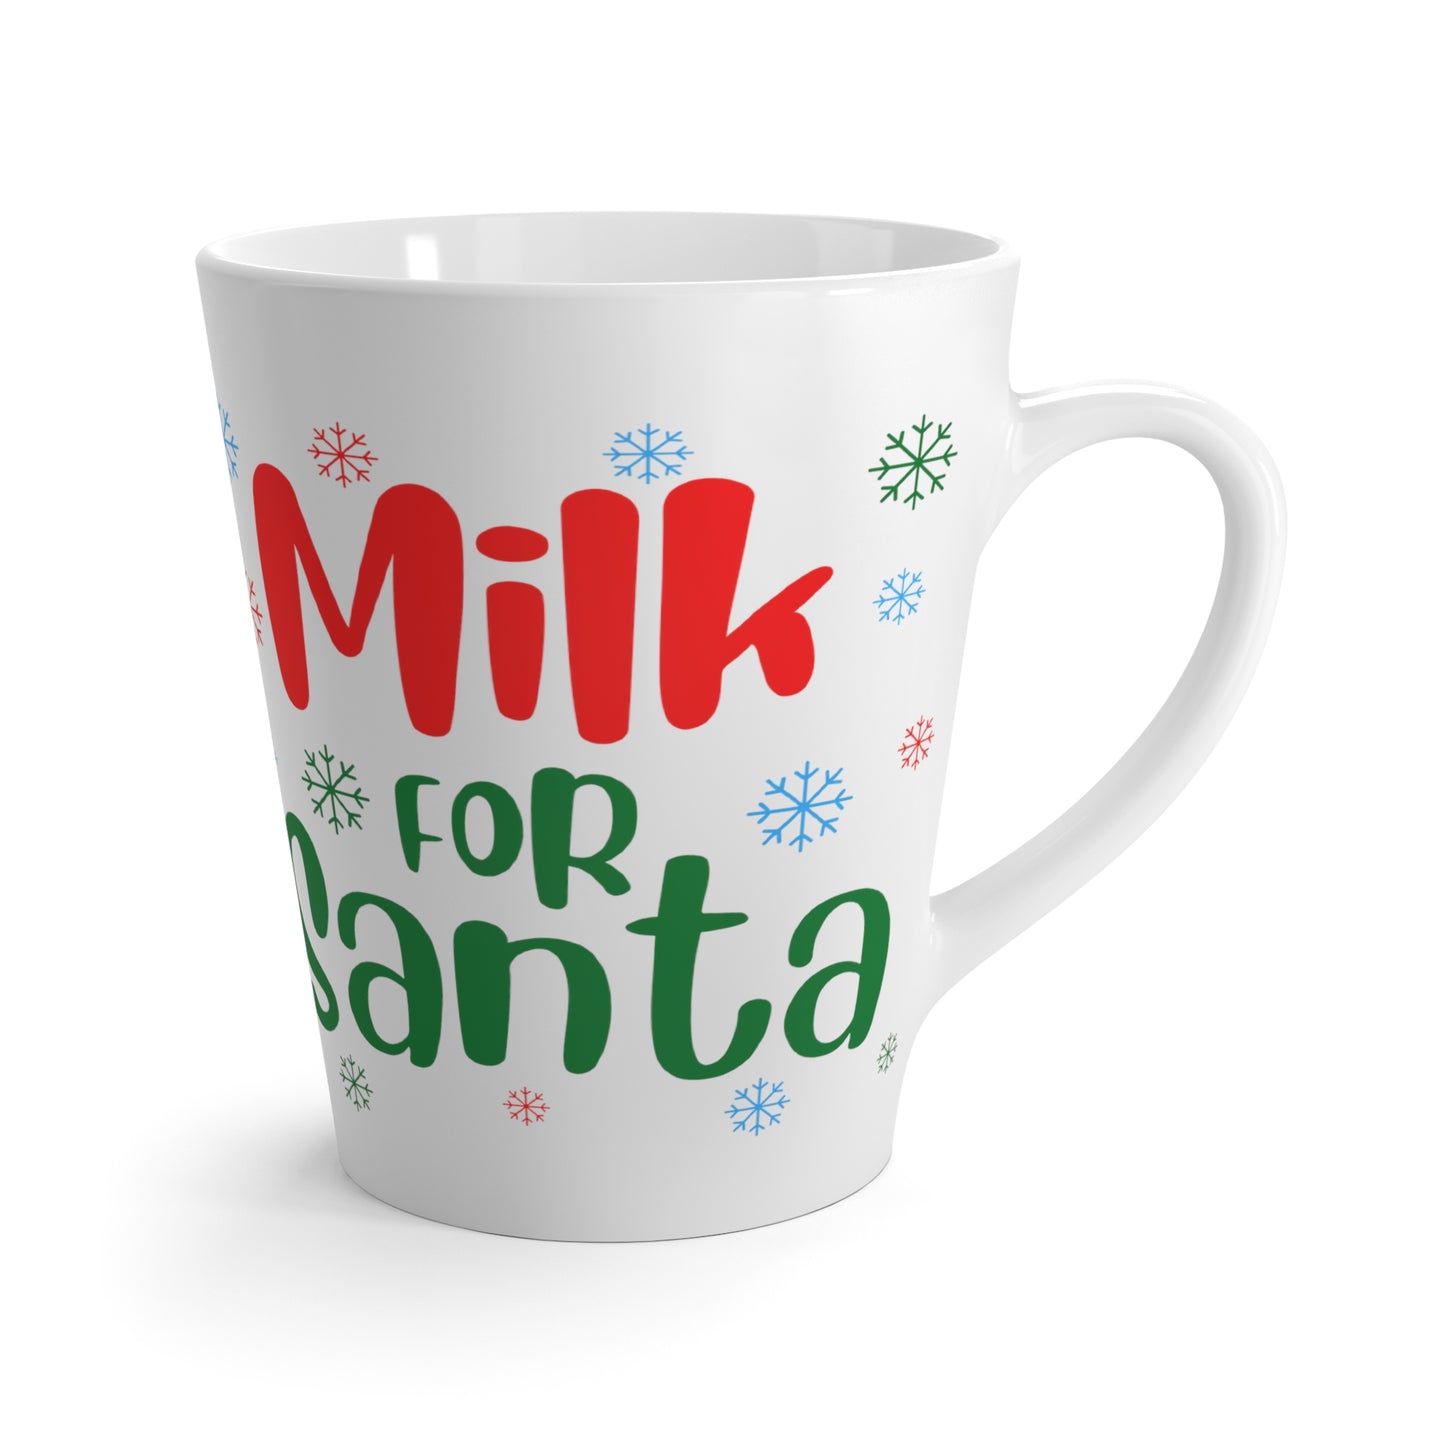 Milk for Santa Printed Latte Coffee Mug, 12oz